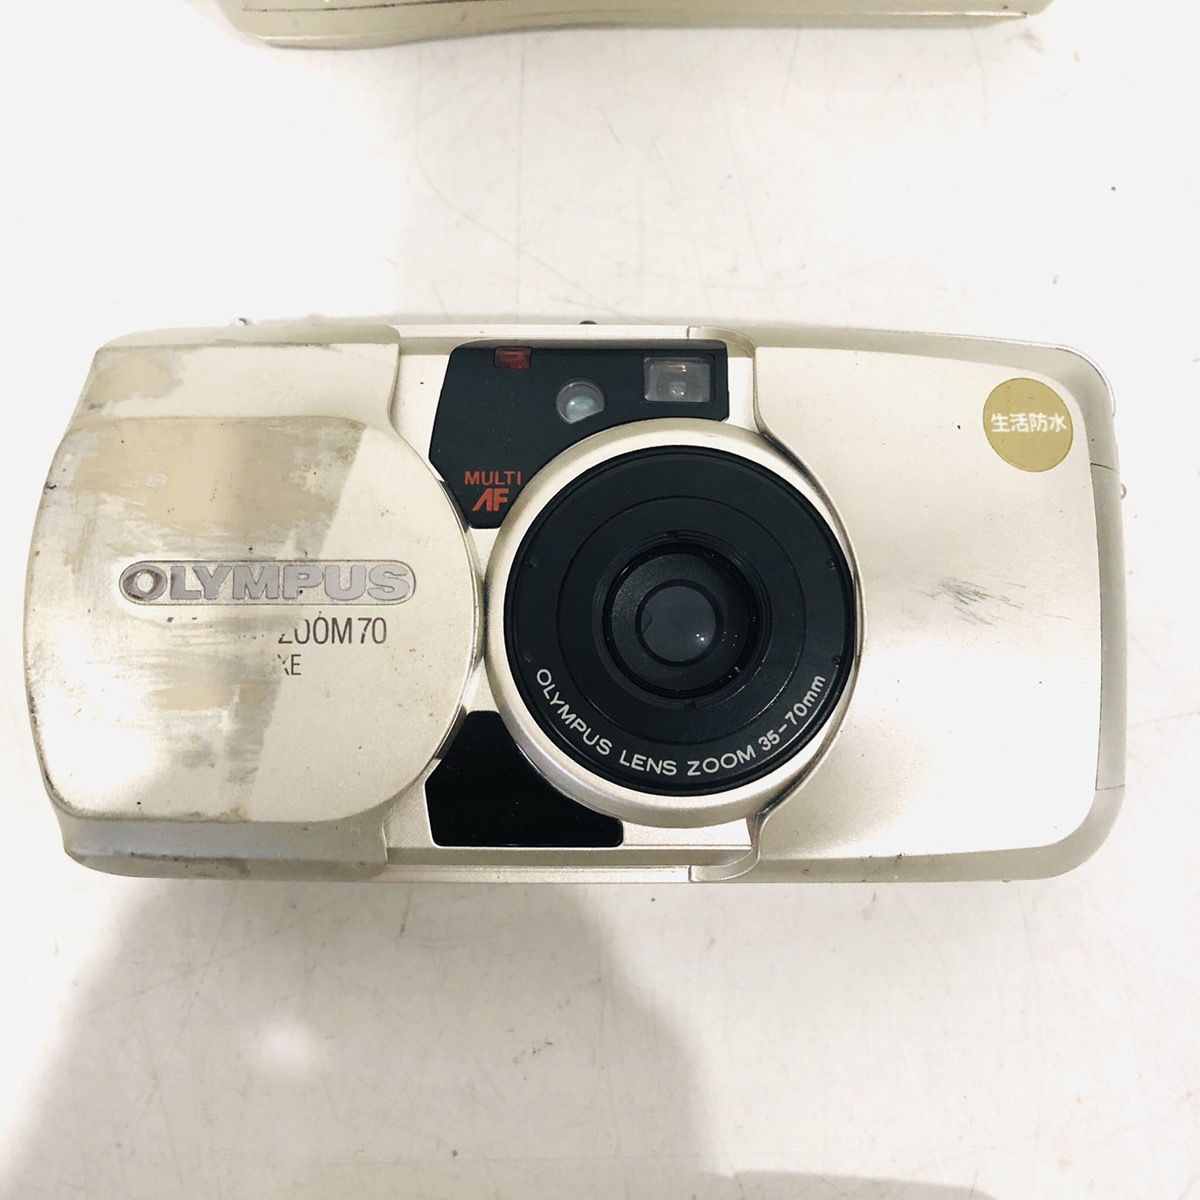 [R1339]OLYMPUS Olympus mju Mu μ film camera compact camera large amount set sale ZOOM115 ZOOM105 ZOOM70 ZOOM PANORAMA